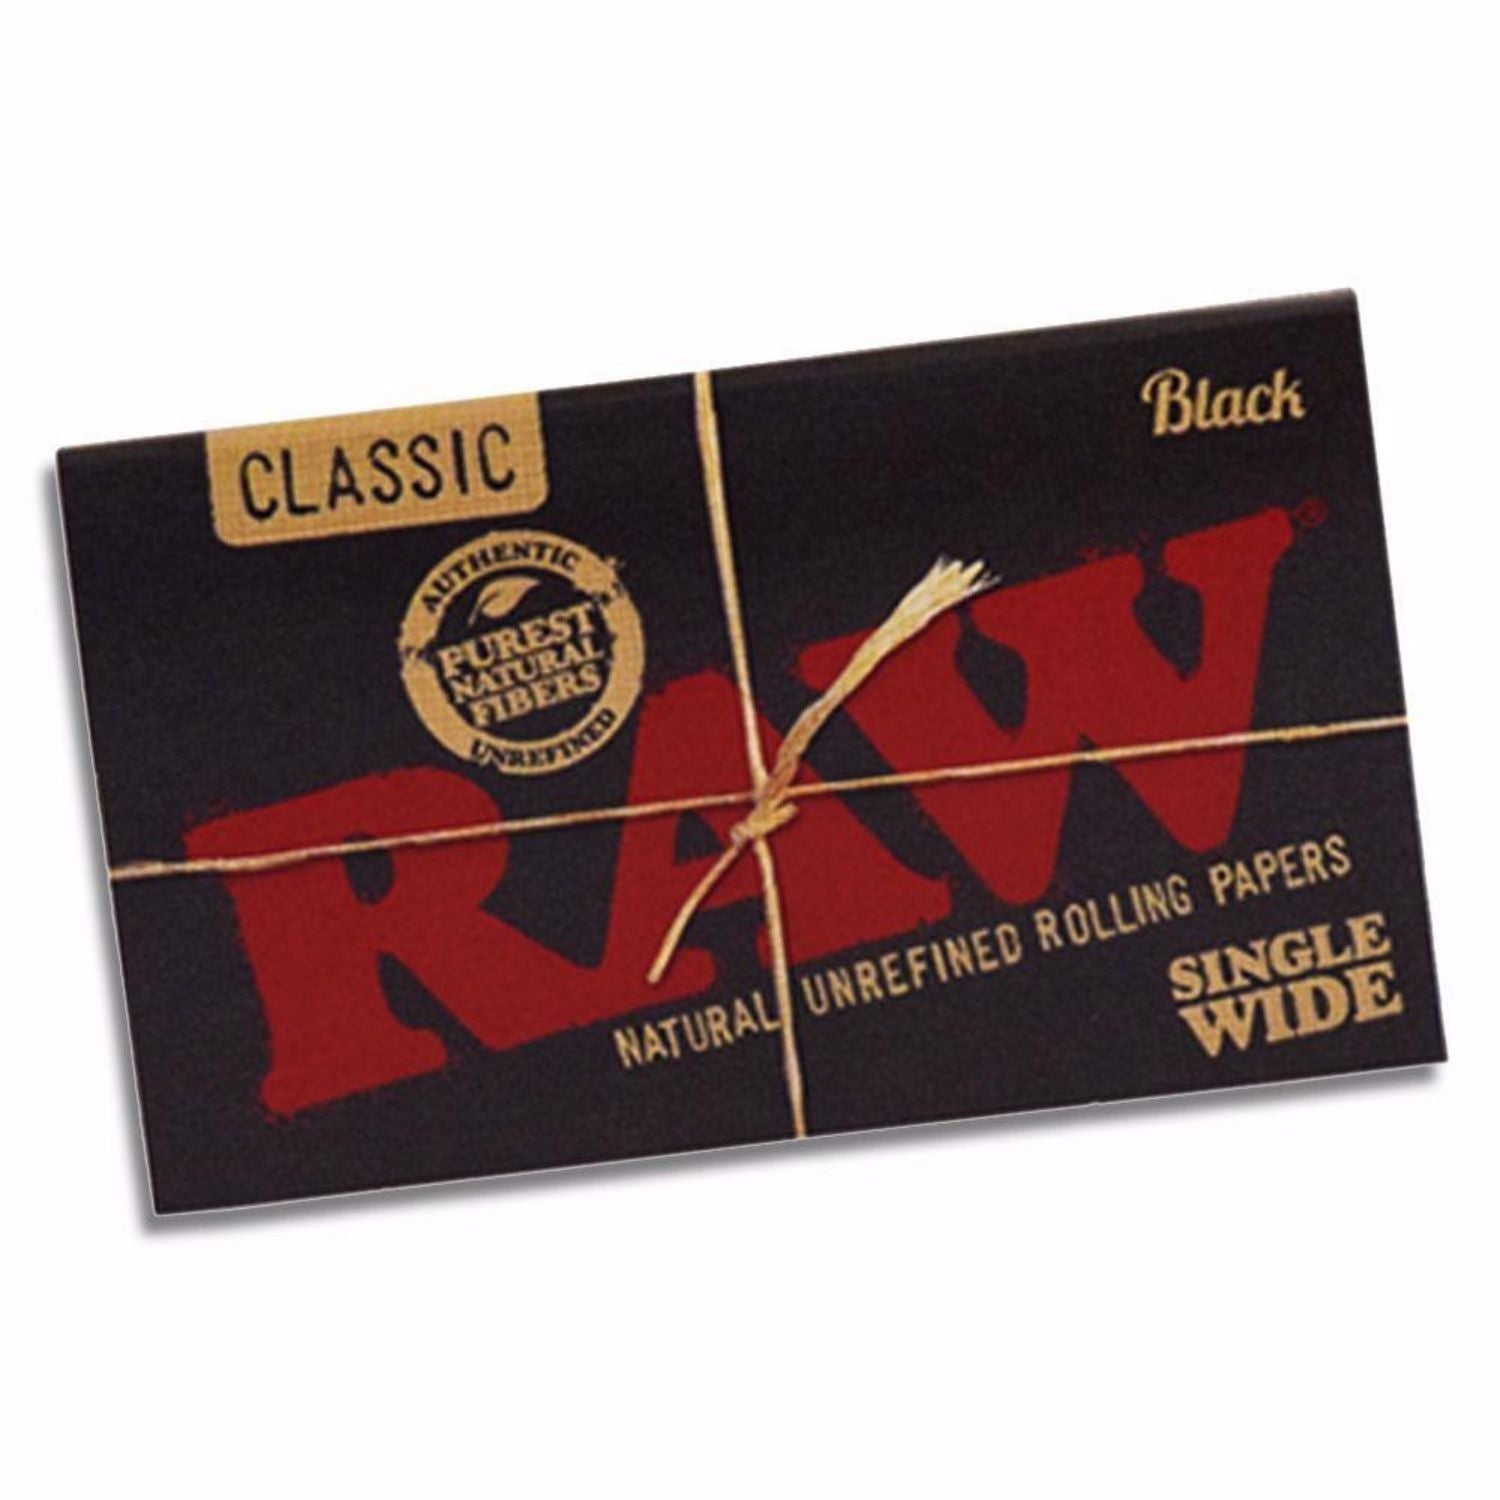 RAW Black Rolling Paper Single Wide - 100 Leaves